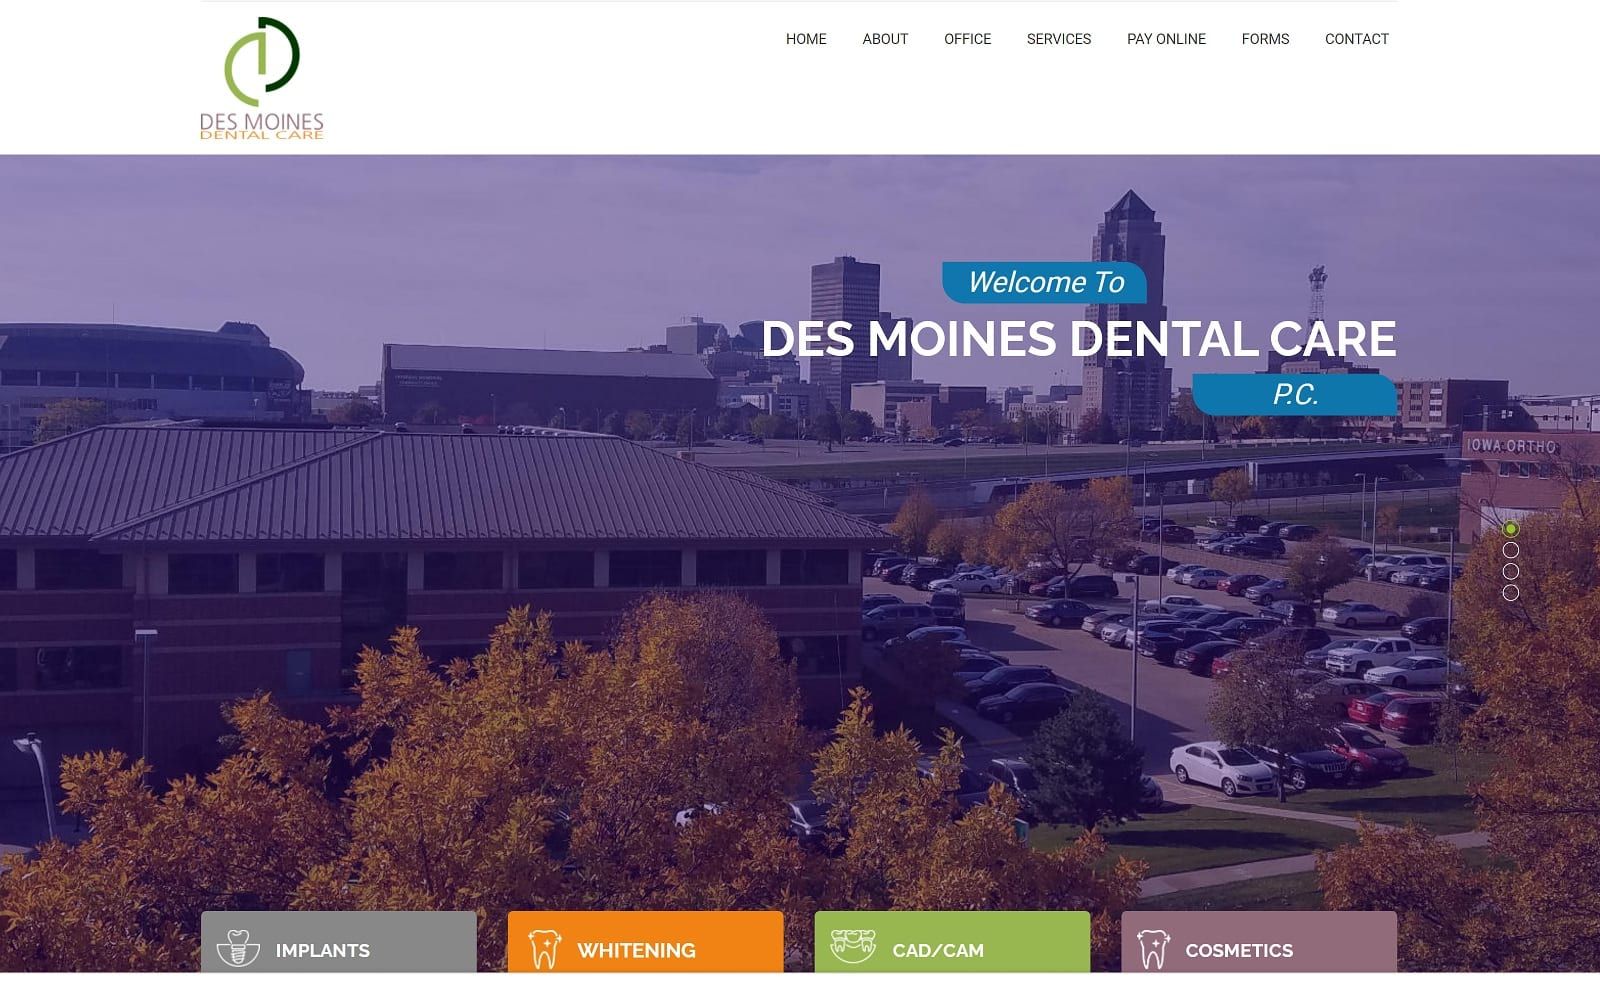 The screenshot of des moines dental care dsmdentalcare. Com website